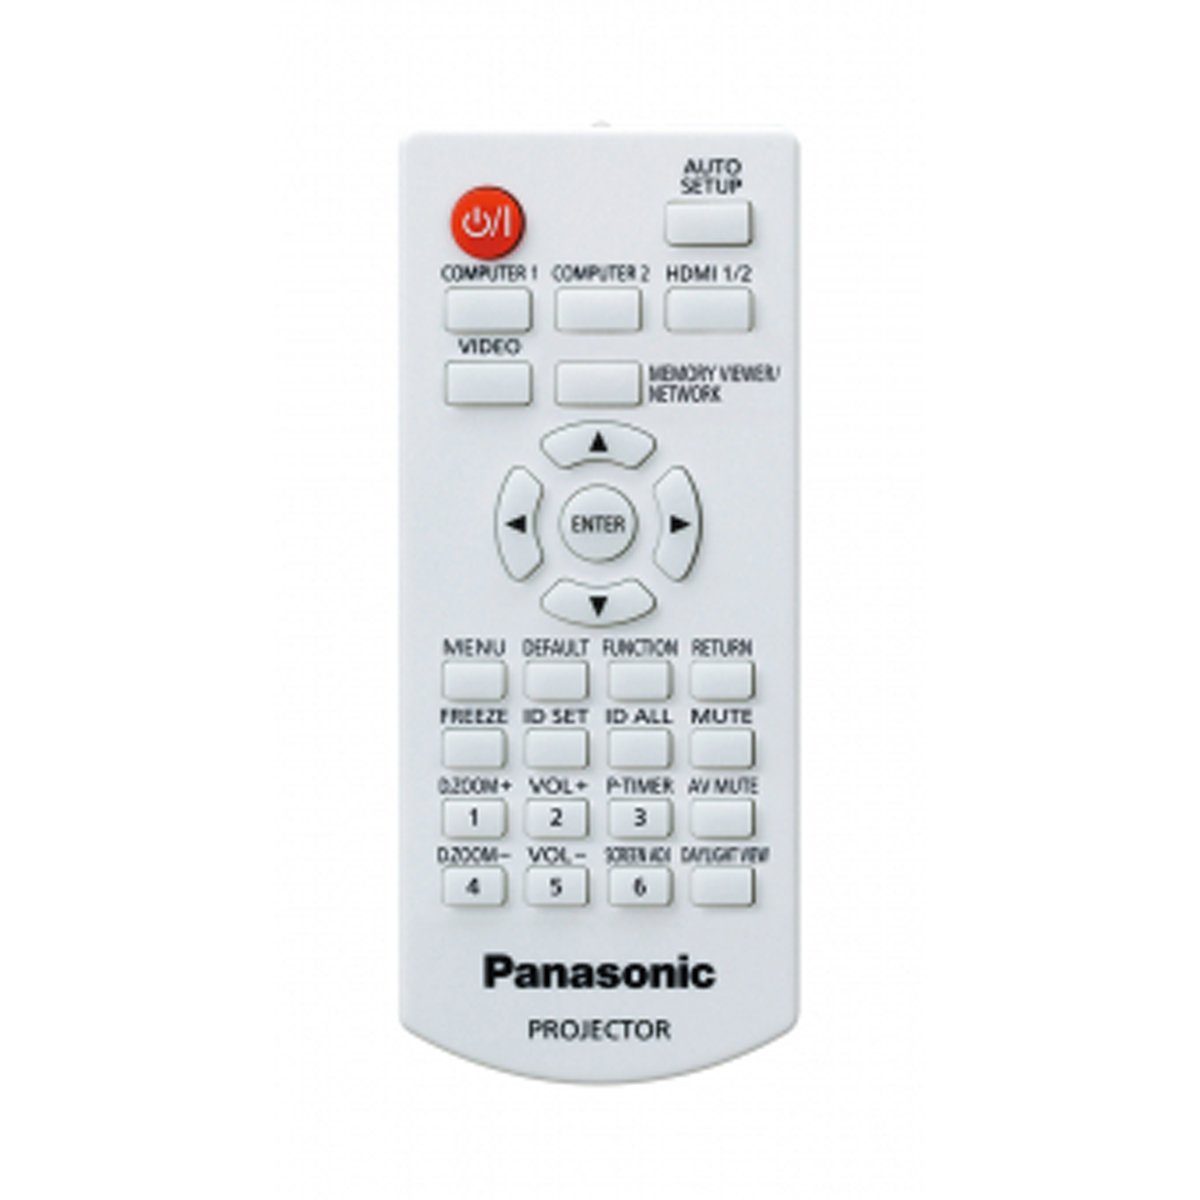 PT-TX440 x (3800 px) 1024 lm, Panasonic 768 16000:1, Beamer